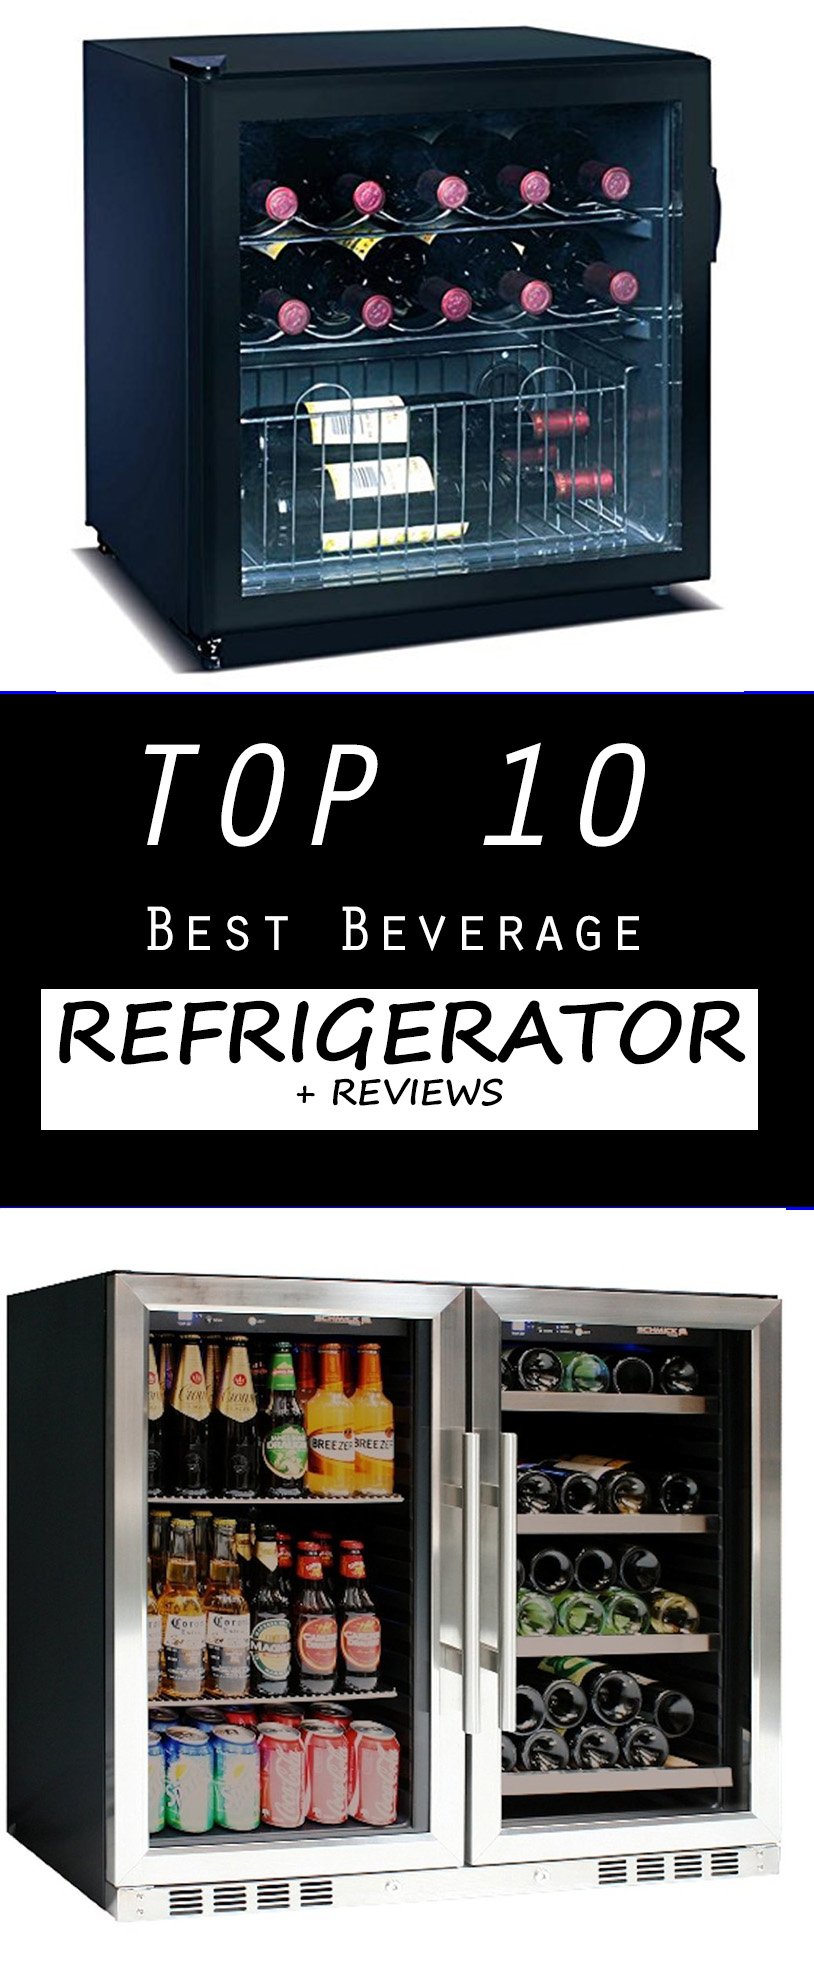 Top 10 Best Beverage Refrigerator + Reviews